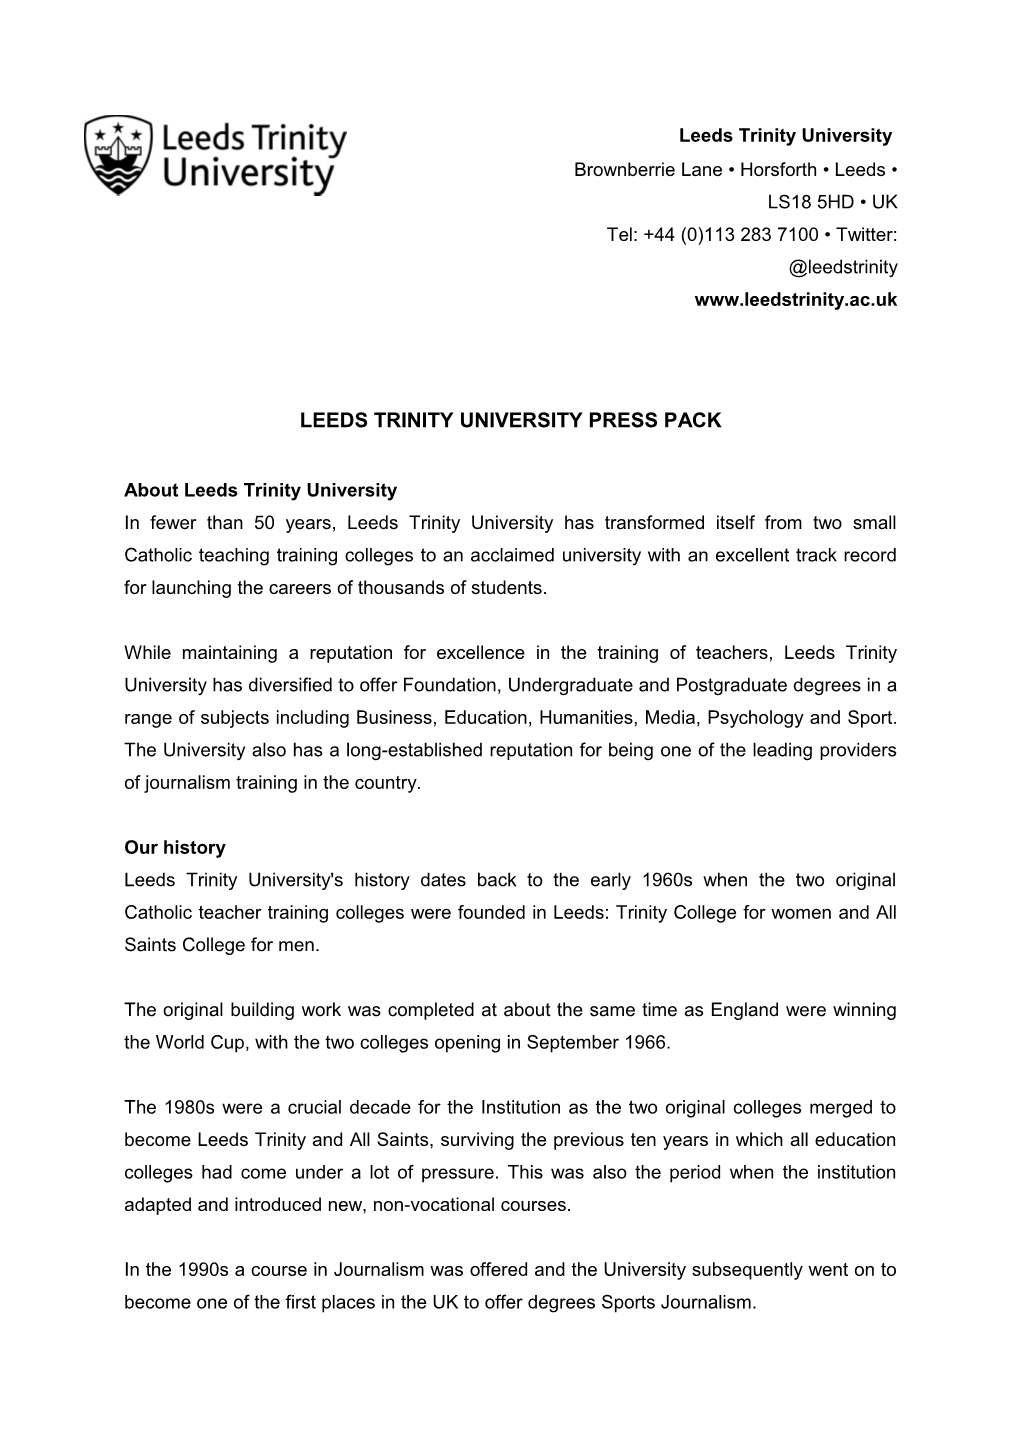 Leeds Trinity University Press Pack